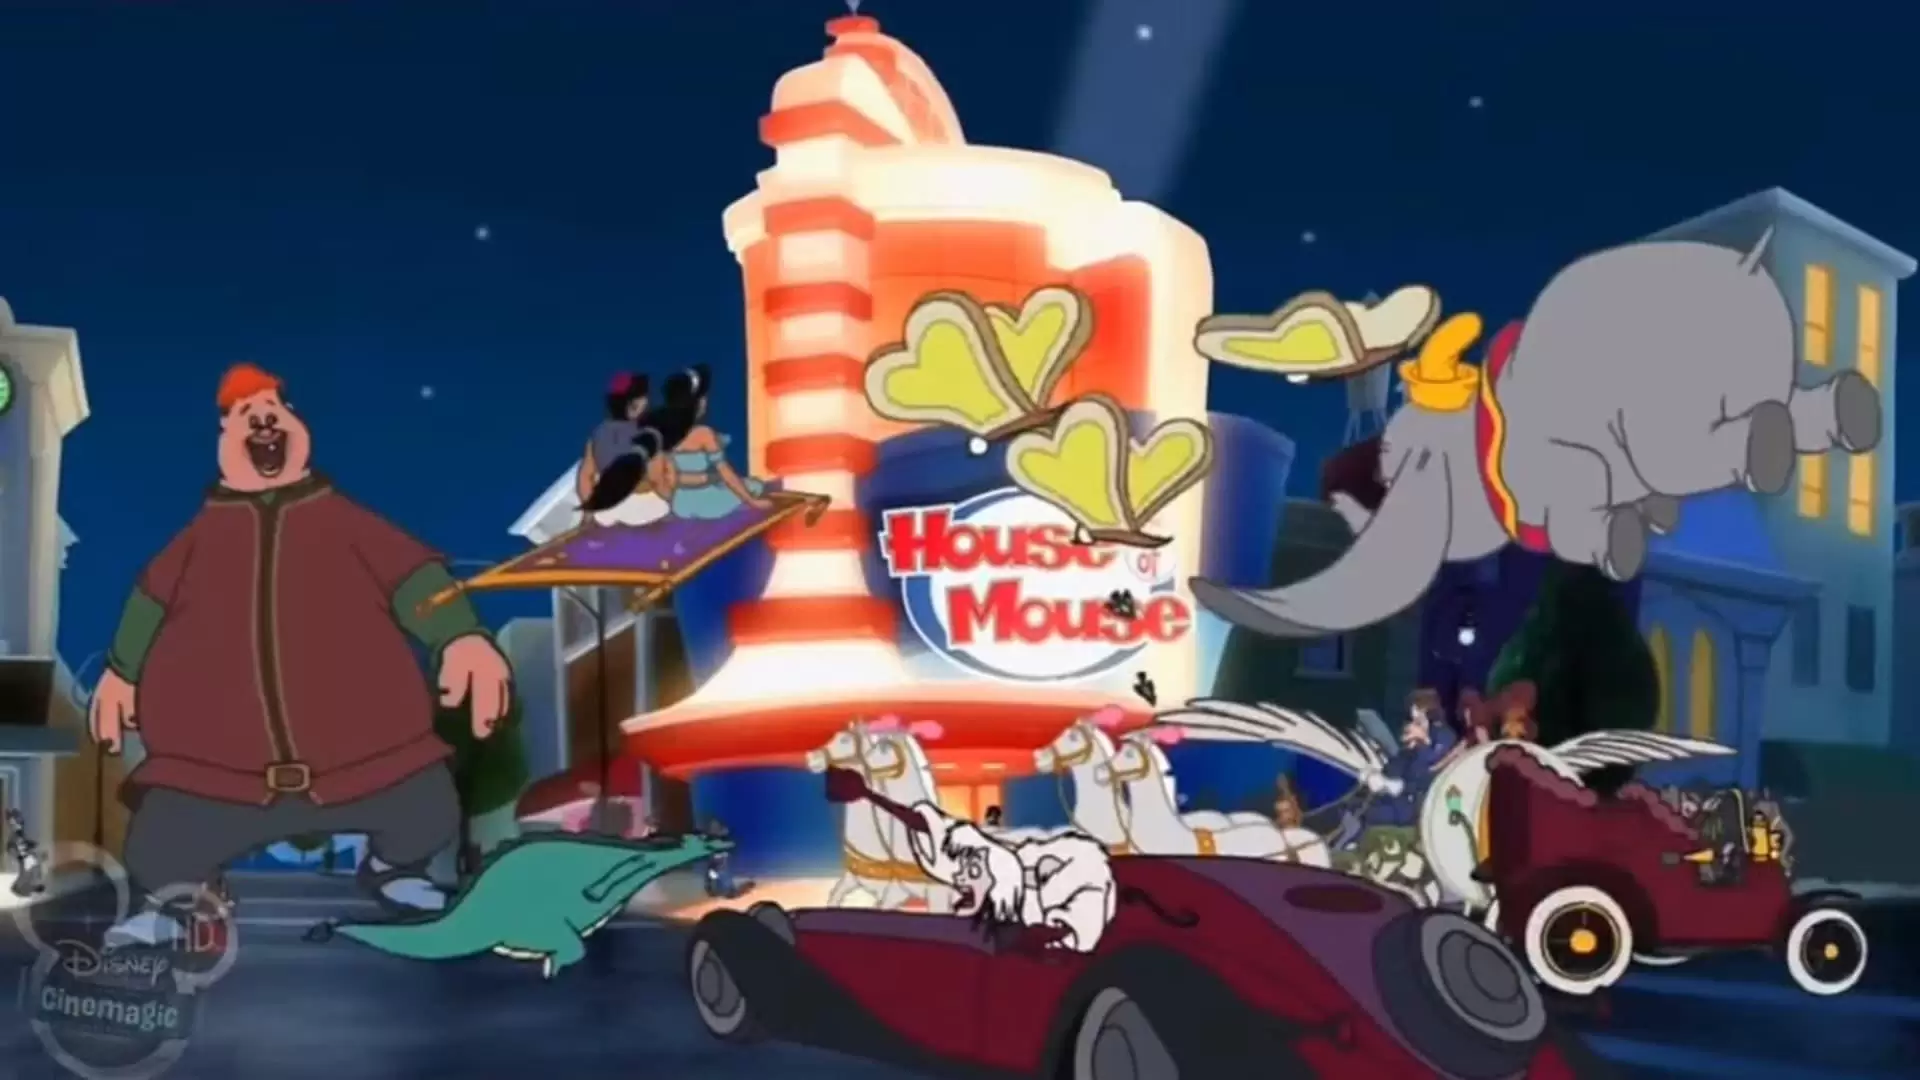 دانلود انیمیشن House of Mouse 2001 (خانه موش)